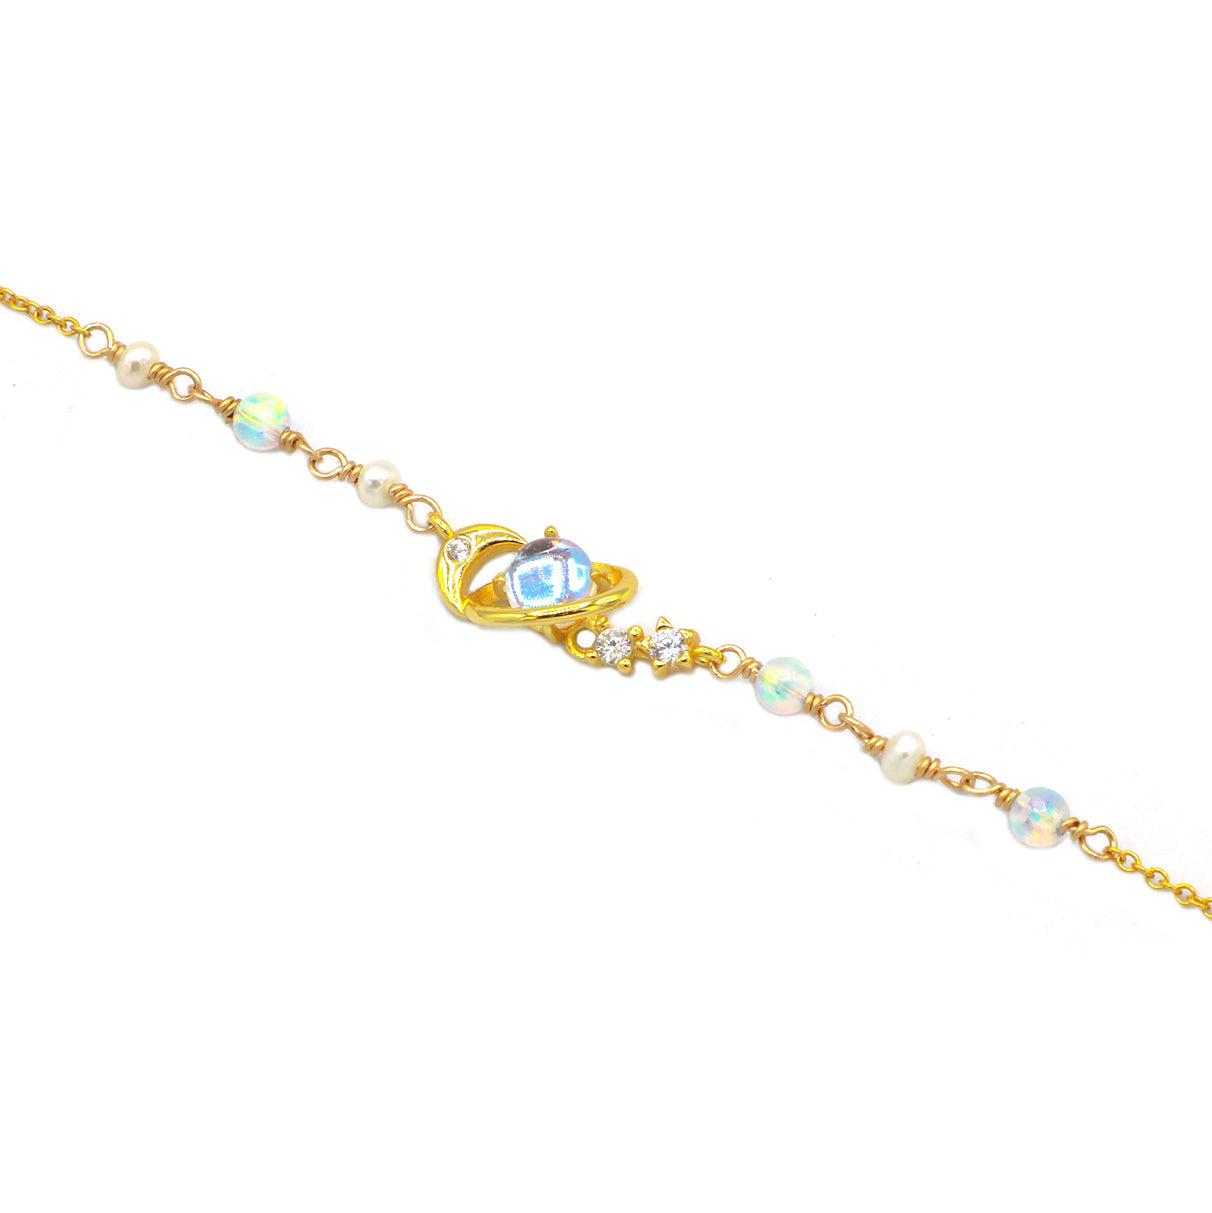 Celestial Pearl and Opal Bracelet